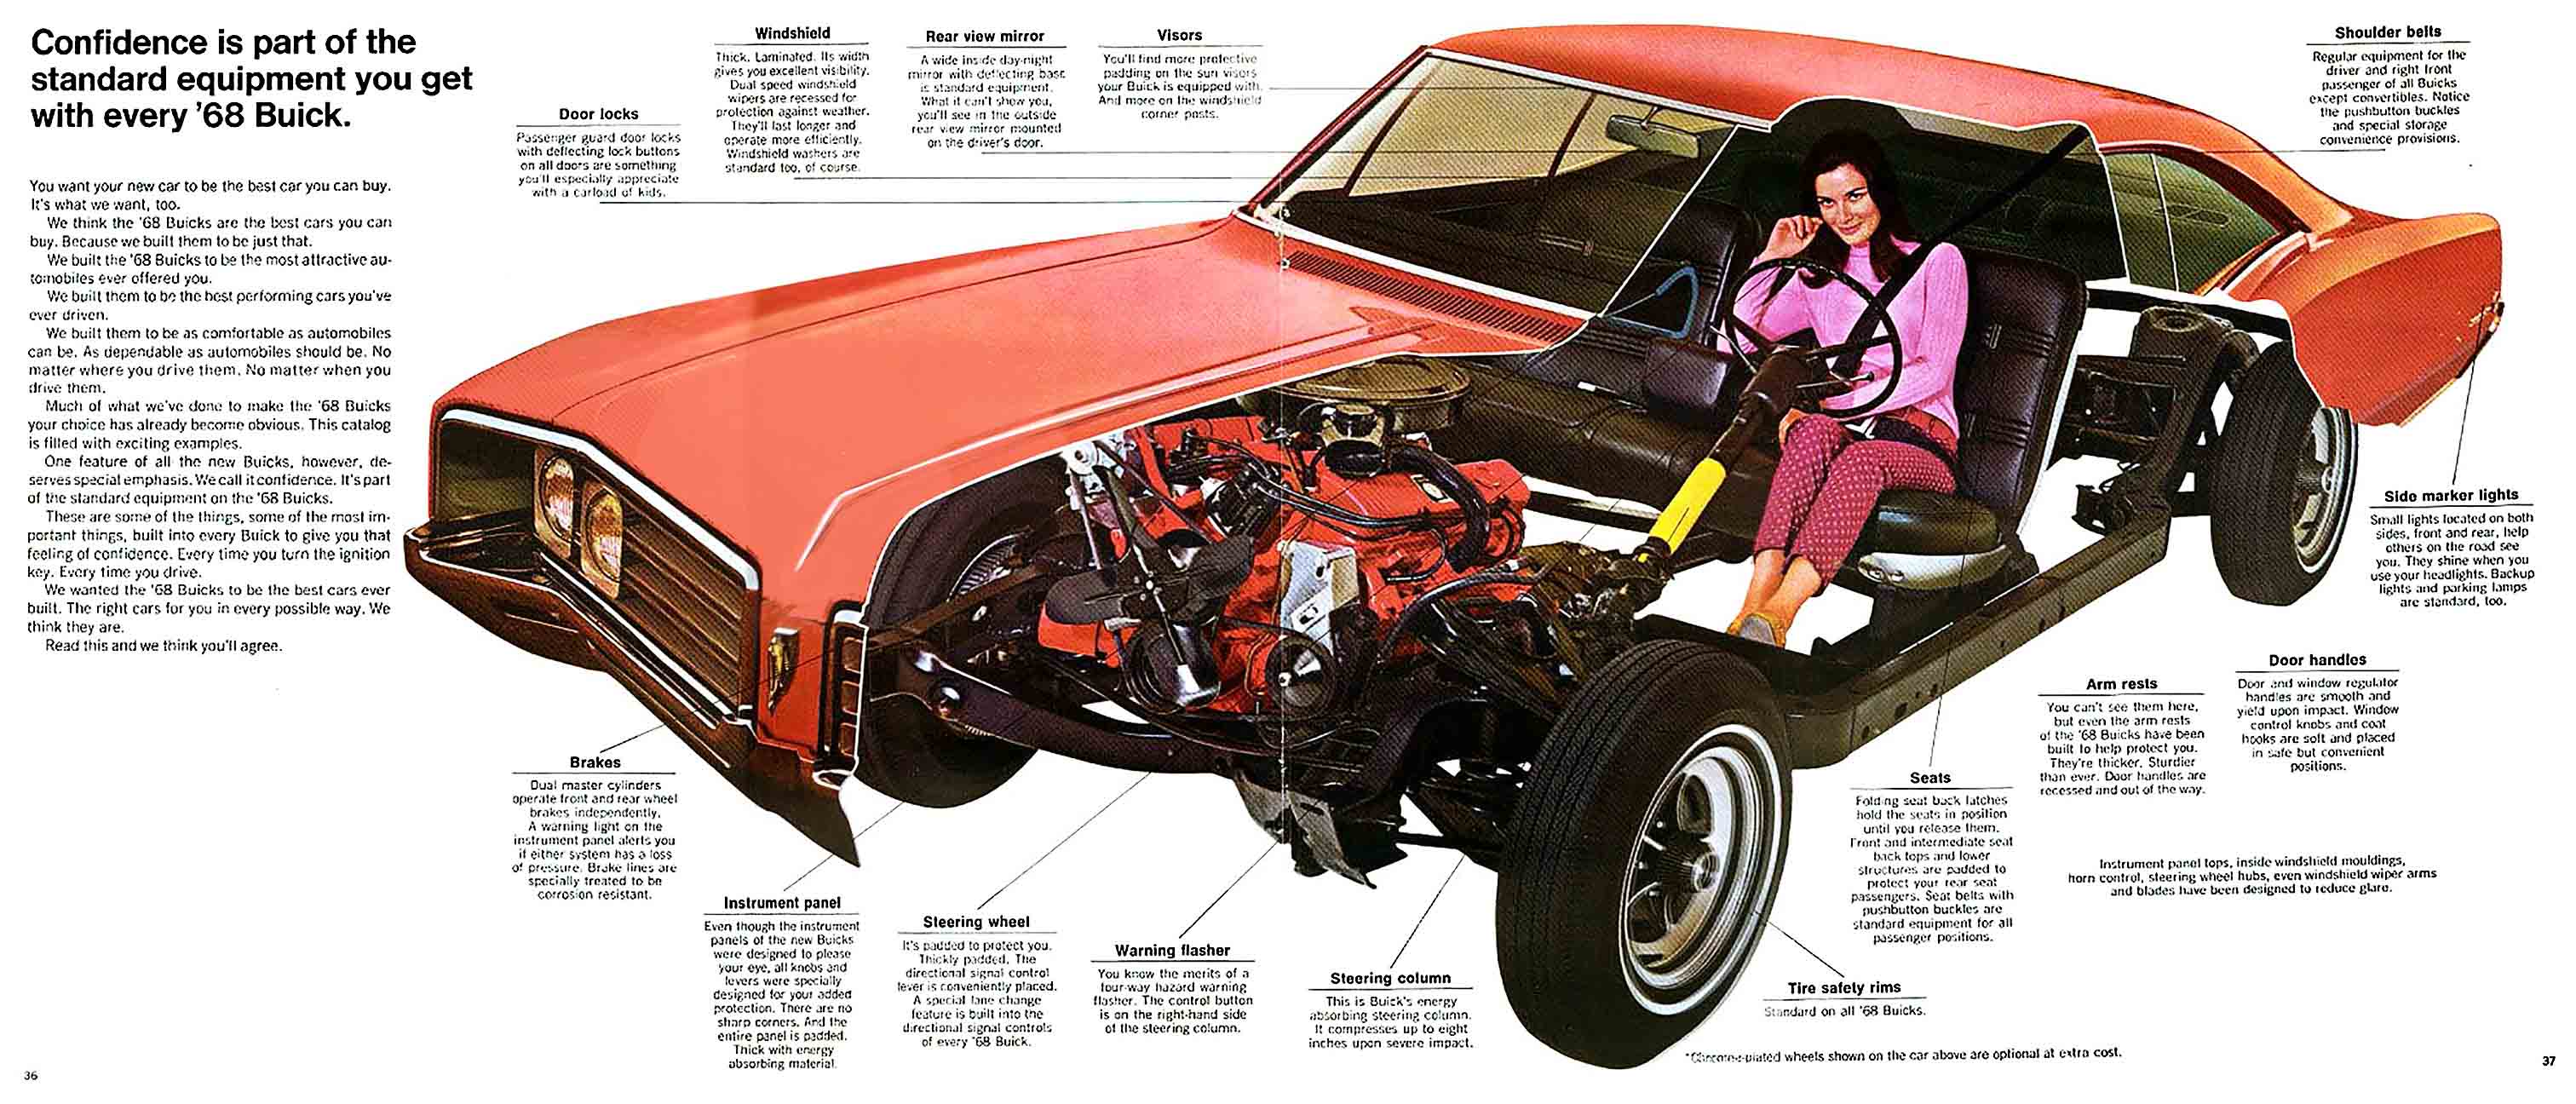 1968 Buick Full Line Prestige Brochure-36-37